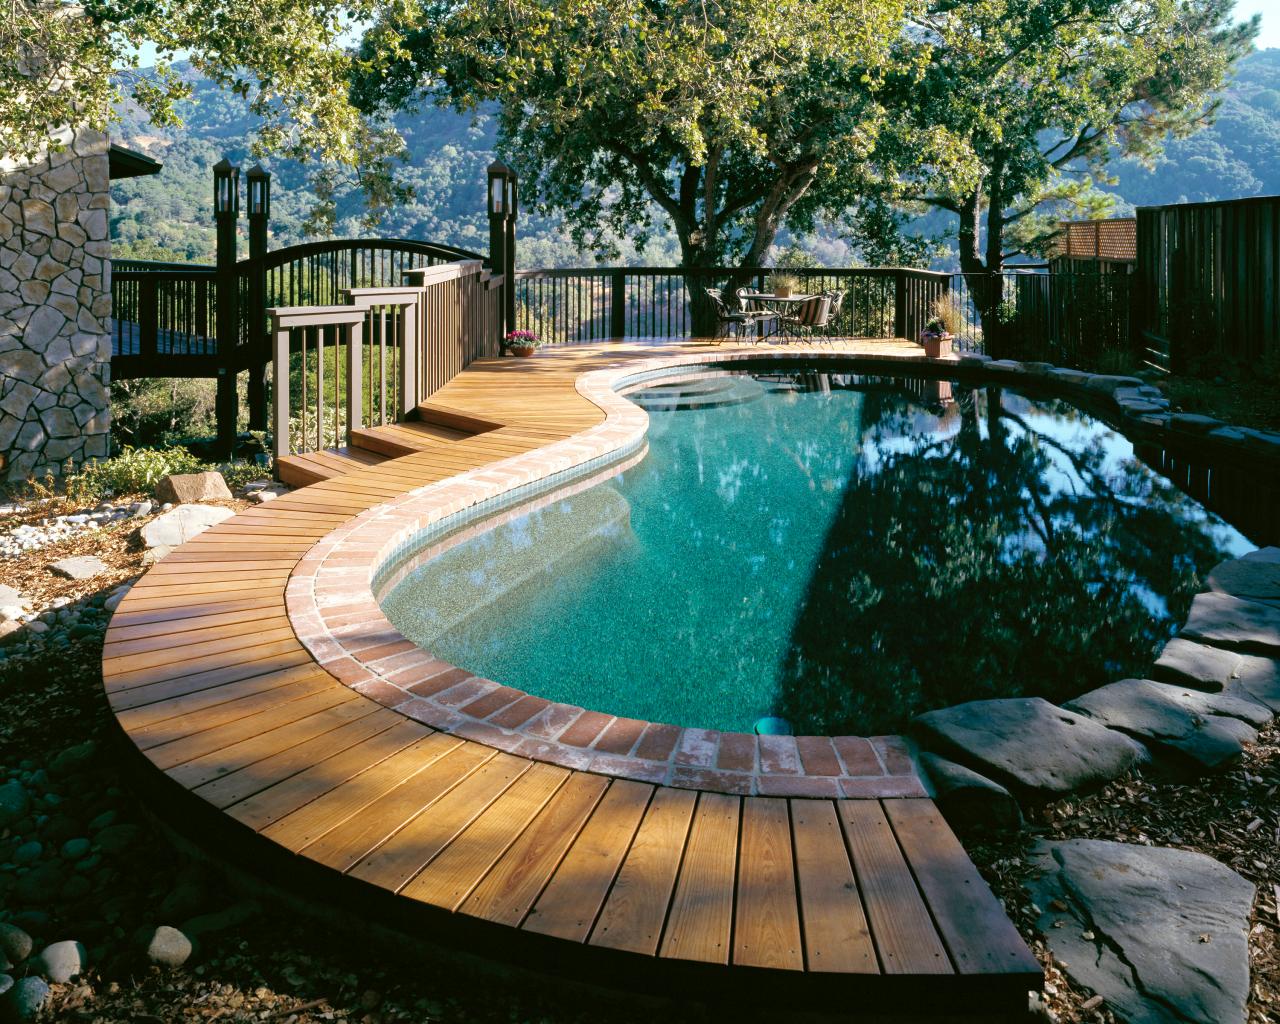 Pool Deck Designs And Options Diy, Decking Around Pool